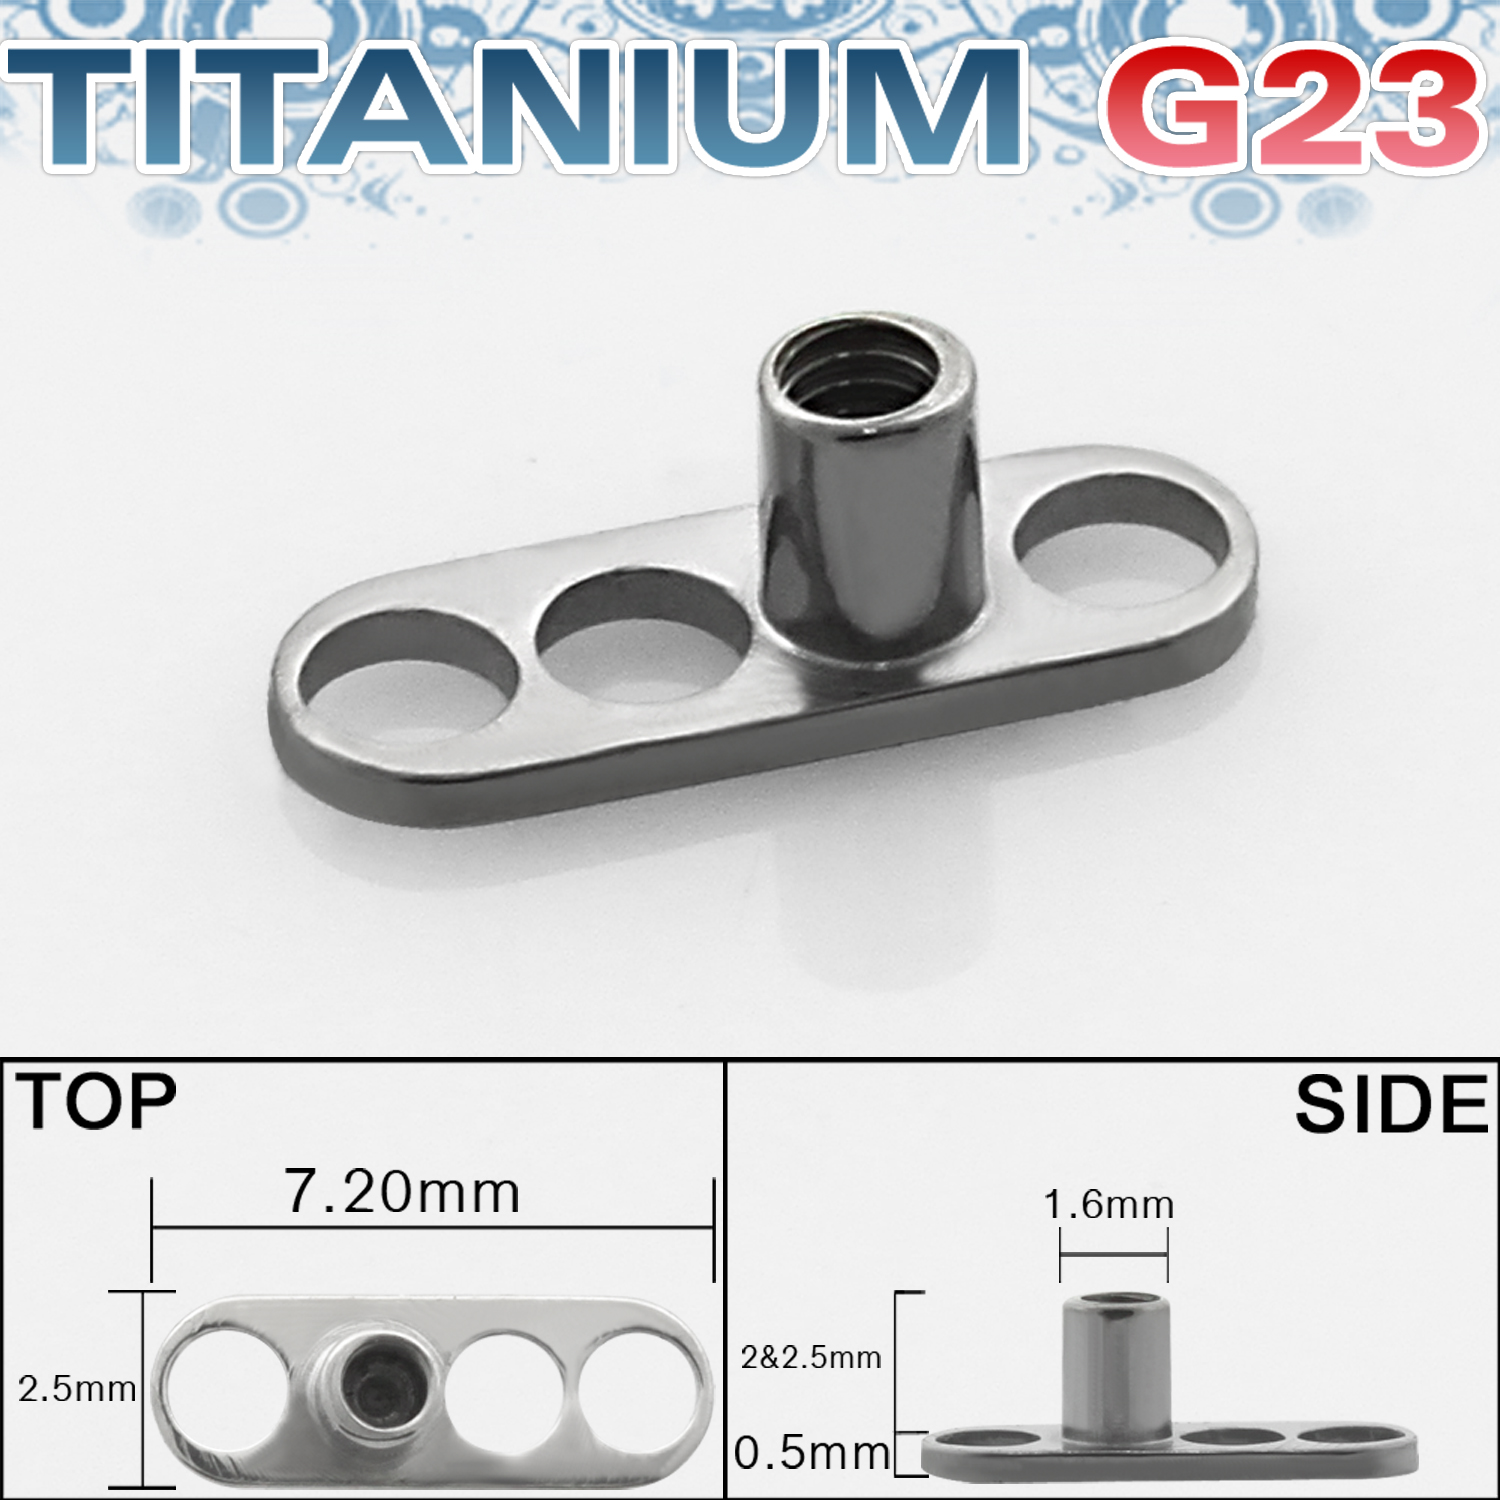 Dermal piercing bas i titanium